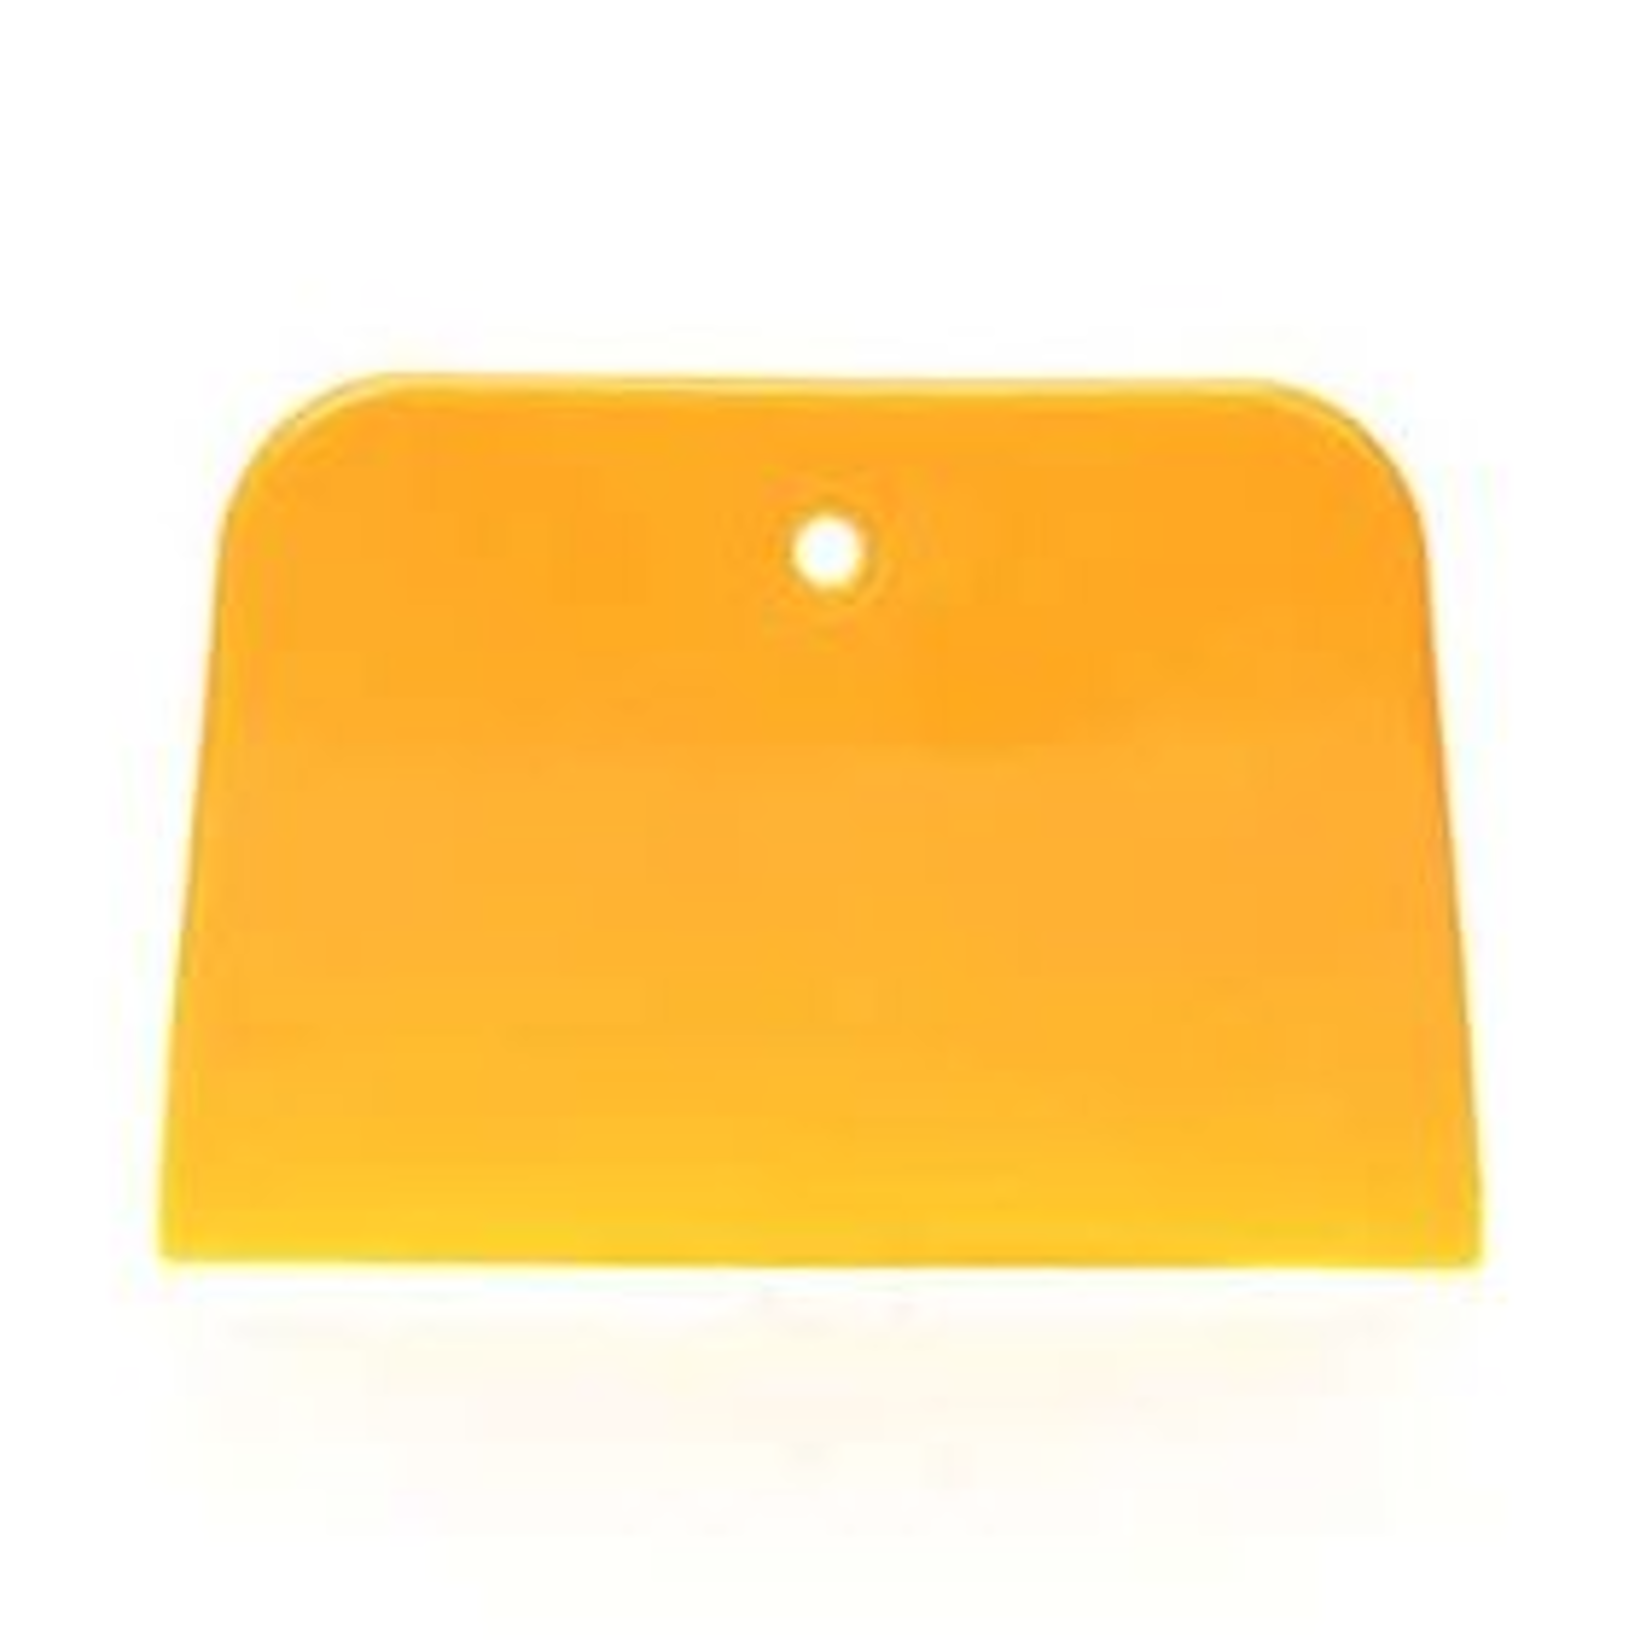 3x4 Yellow Plastic Spreader - SINGLE